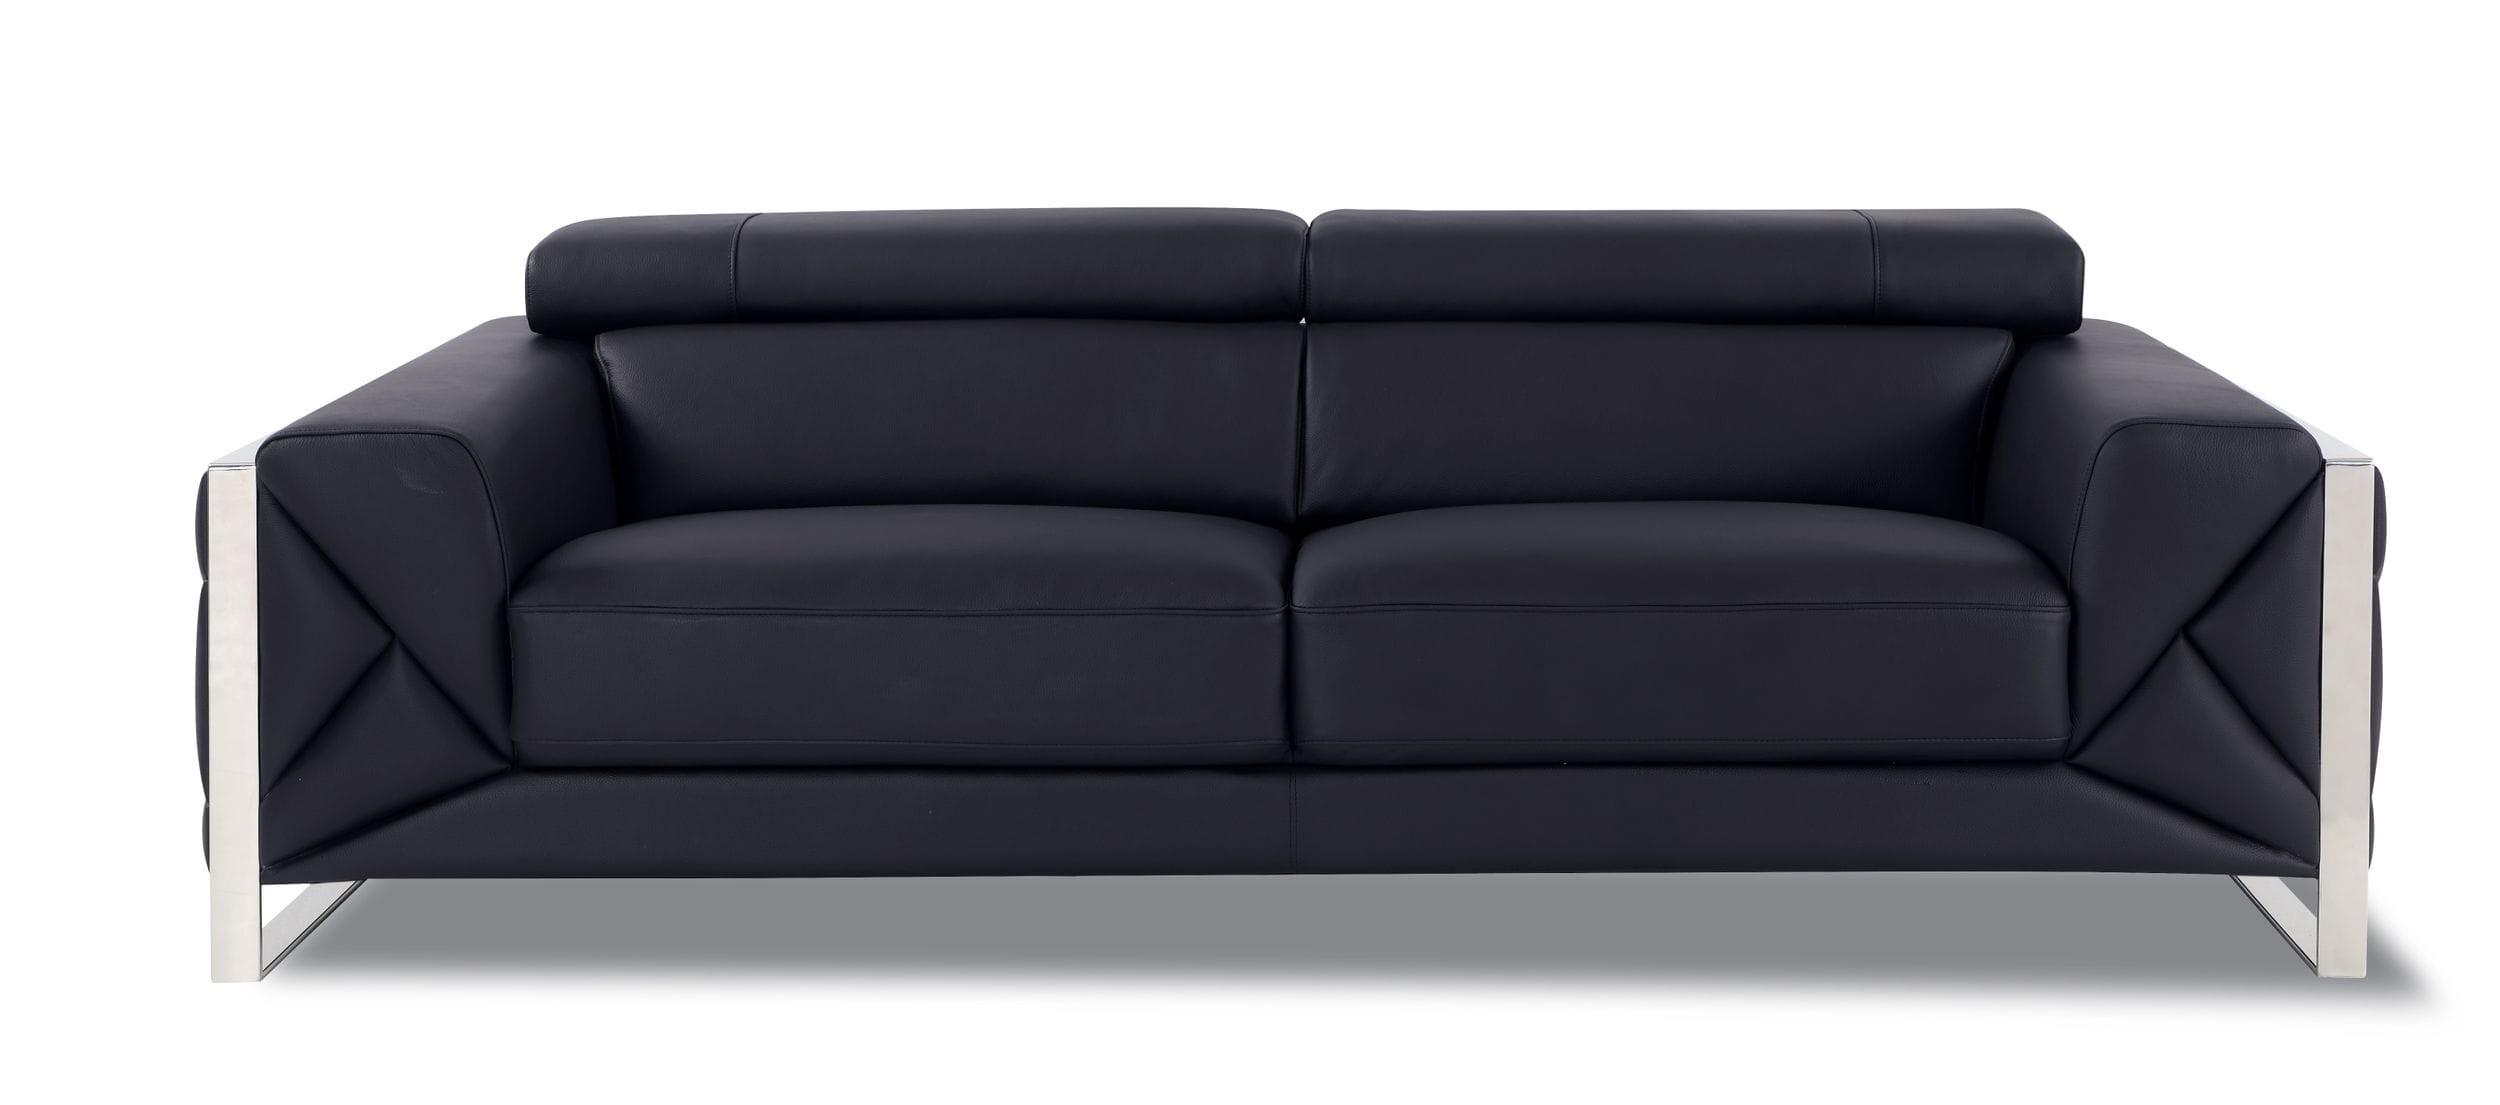 

    
Global United 903 Sofa Loveseat and Chair Set Black 903-BLACK-3-PC
